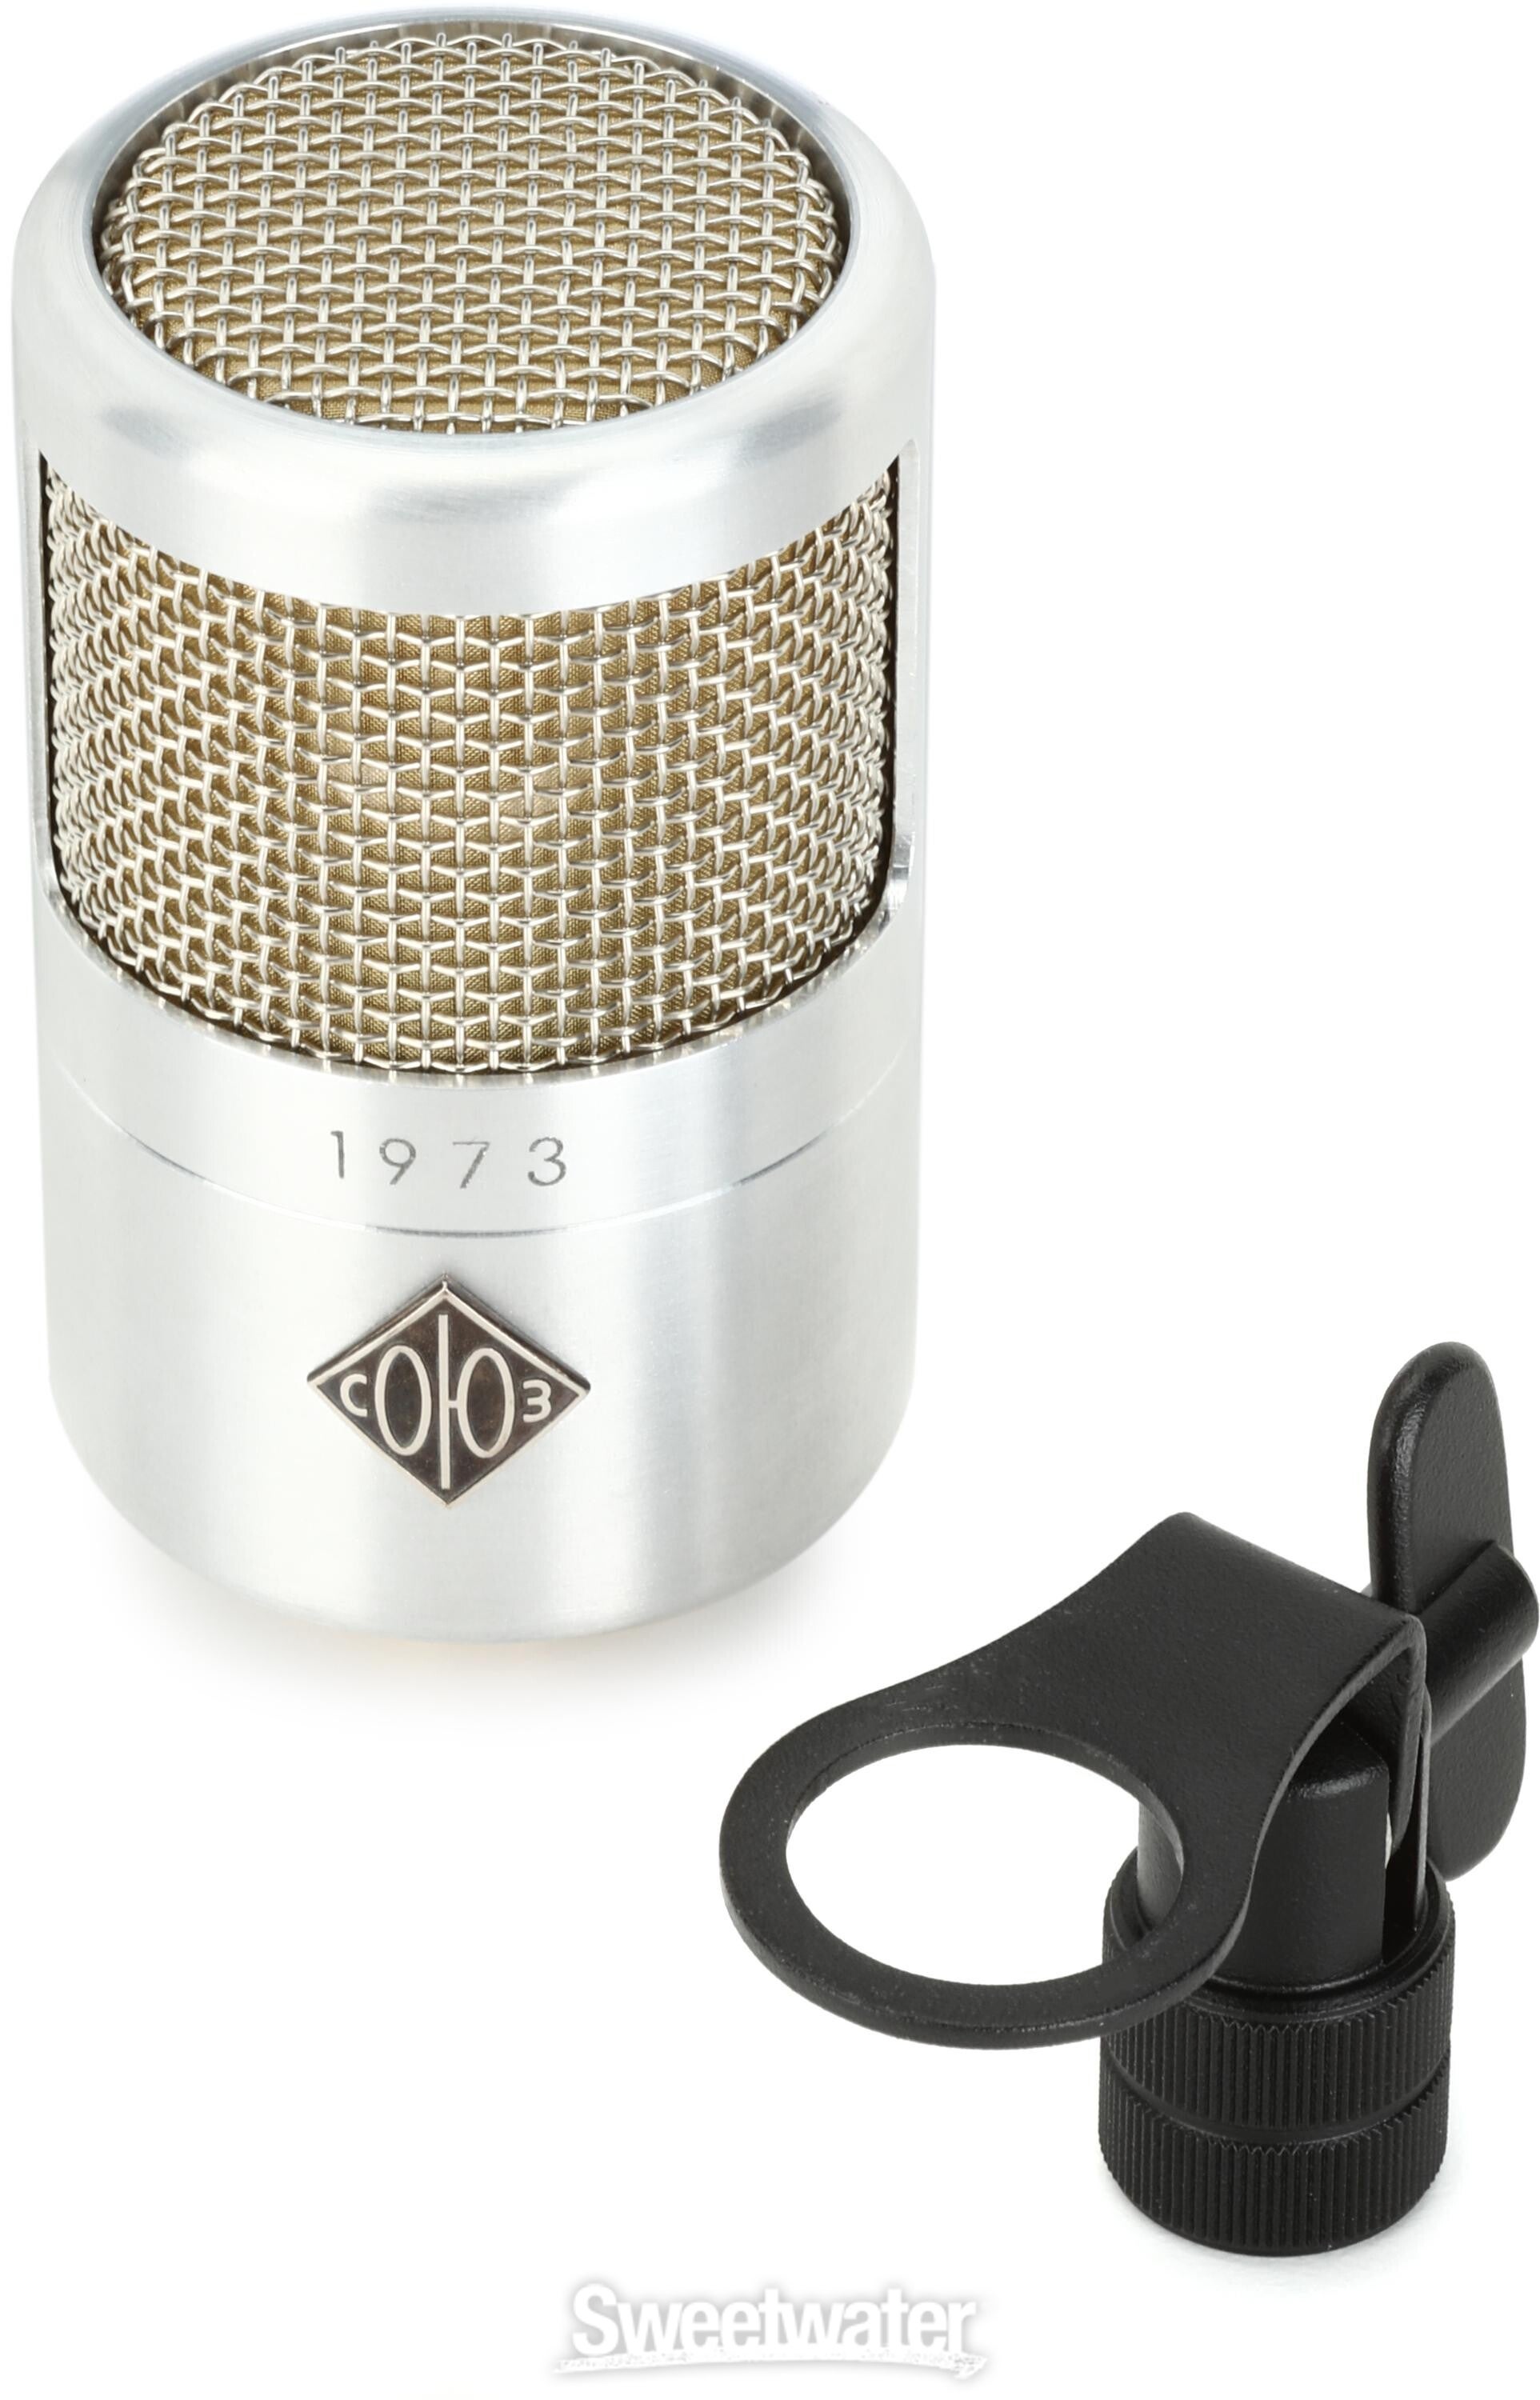 Soyuz 1973 FET Large-diaphragm FET Condenser Microphone - Silver